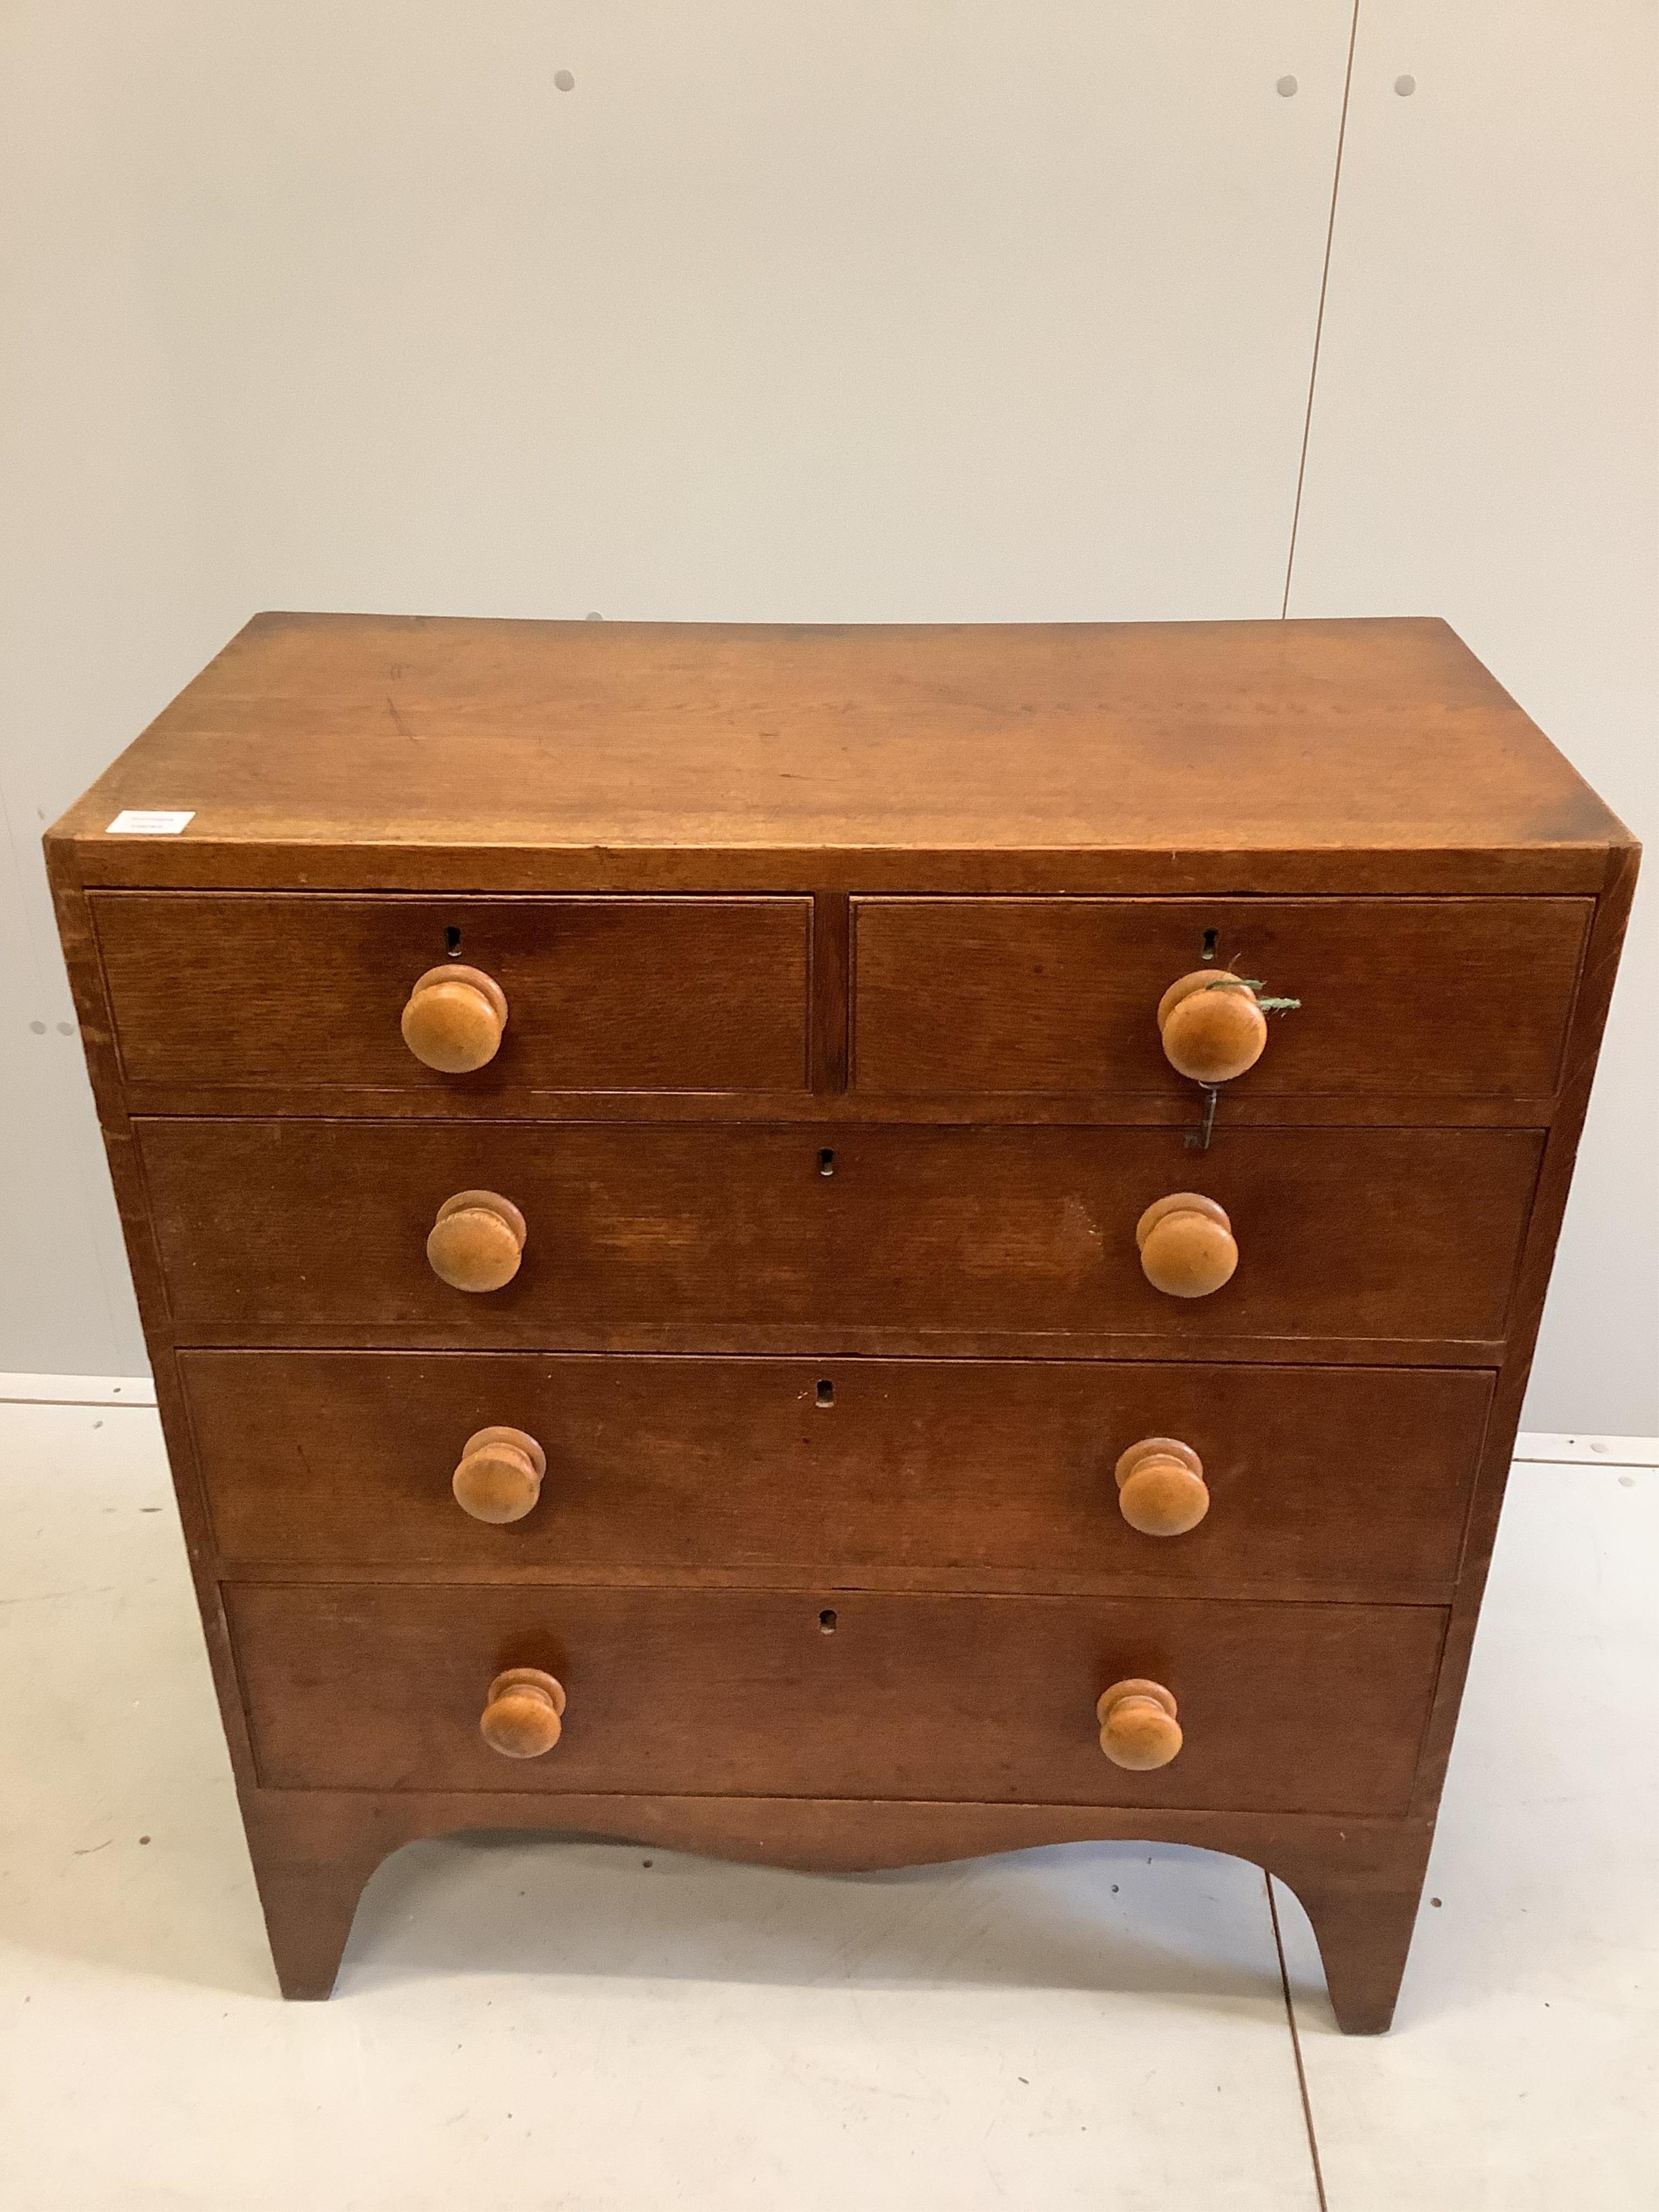 A Regency provincial oak chest of drawers, width 87cm, depth 44cm, height 99cm. Condition - fair